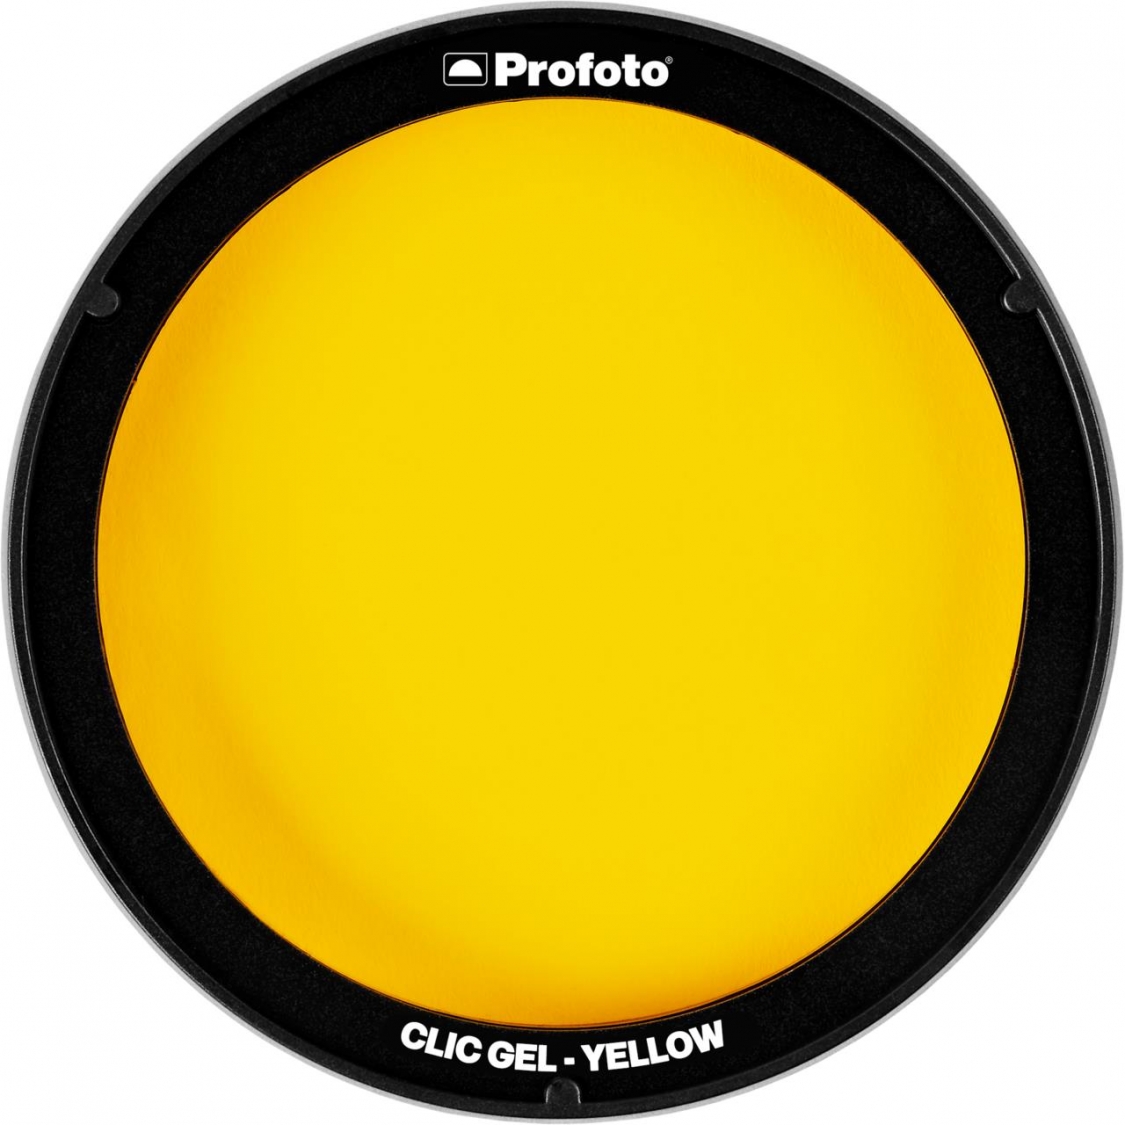 Profoto C1 Clic Gel Yellow